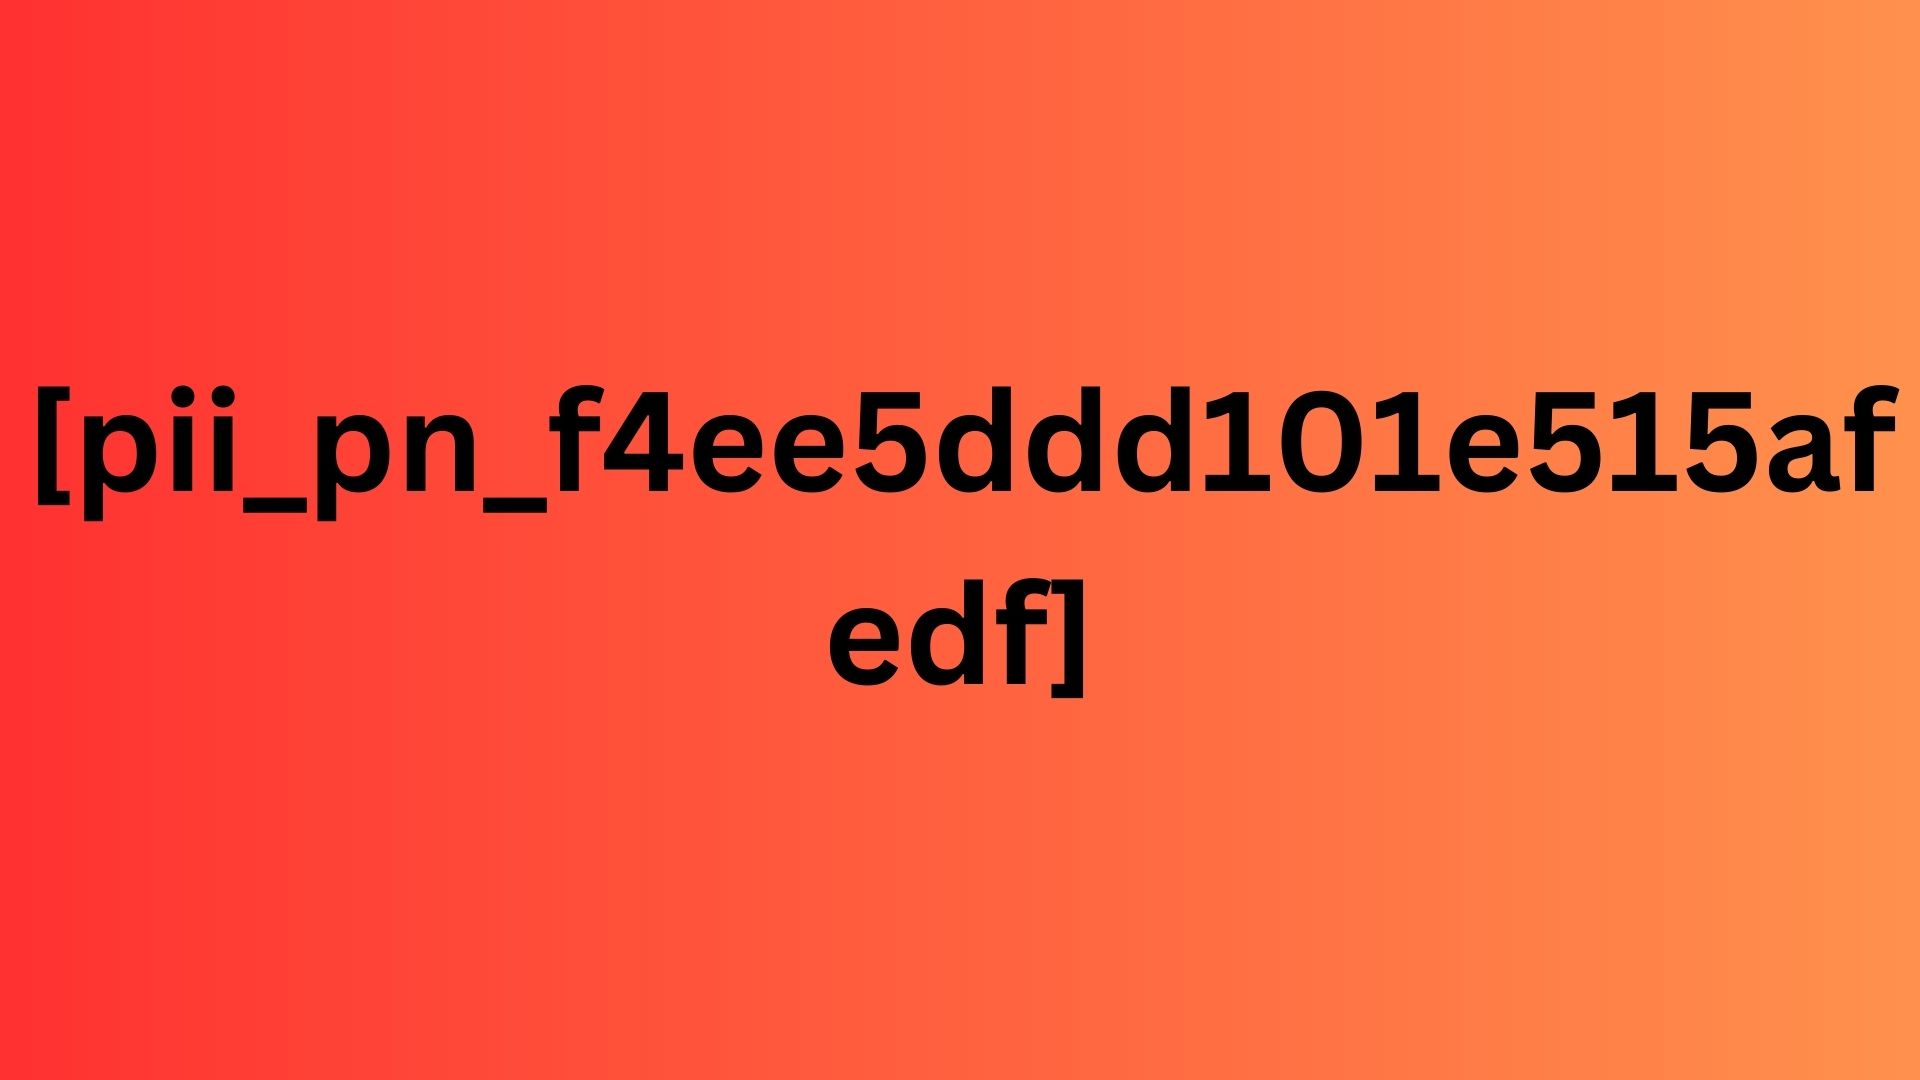 How to solve [pii_pn_f4ee5ddd101e515afedf] error code